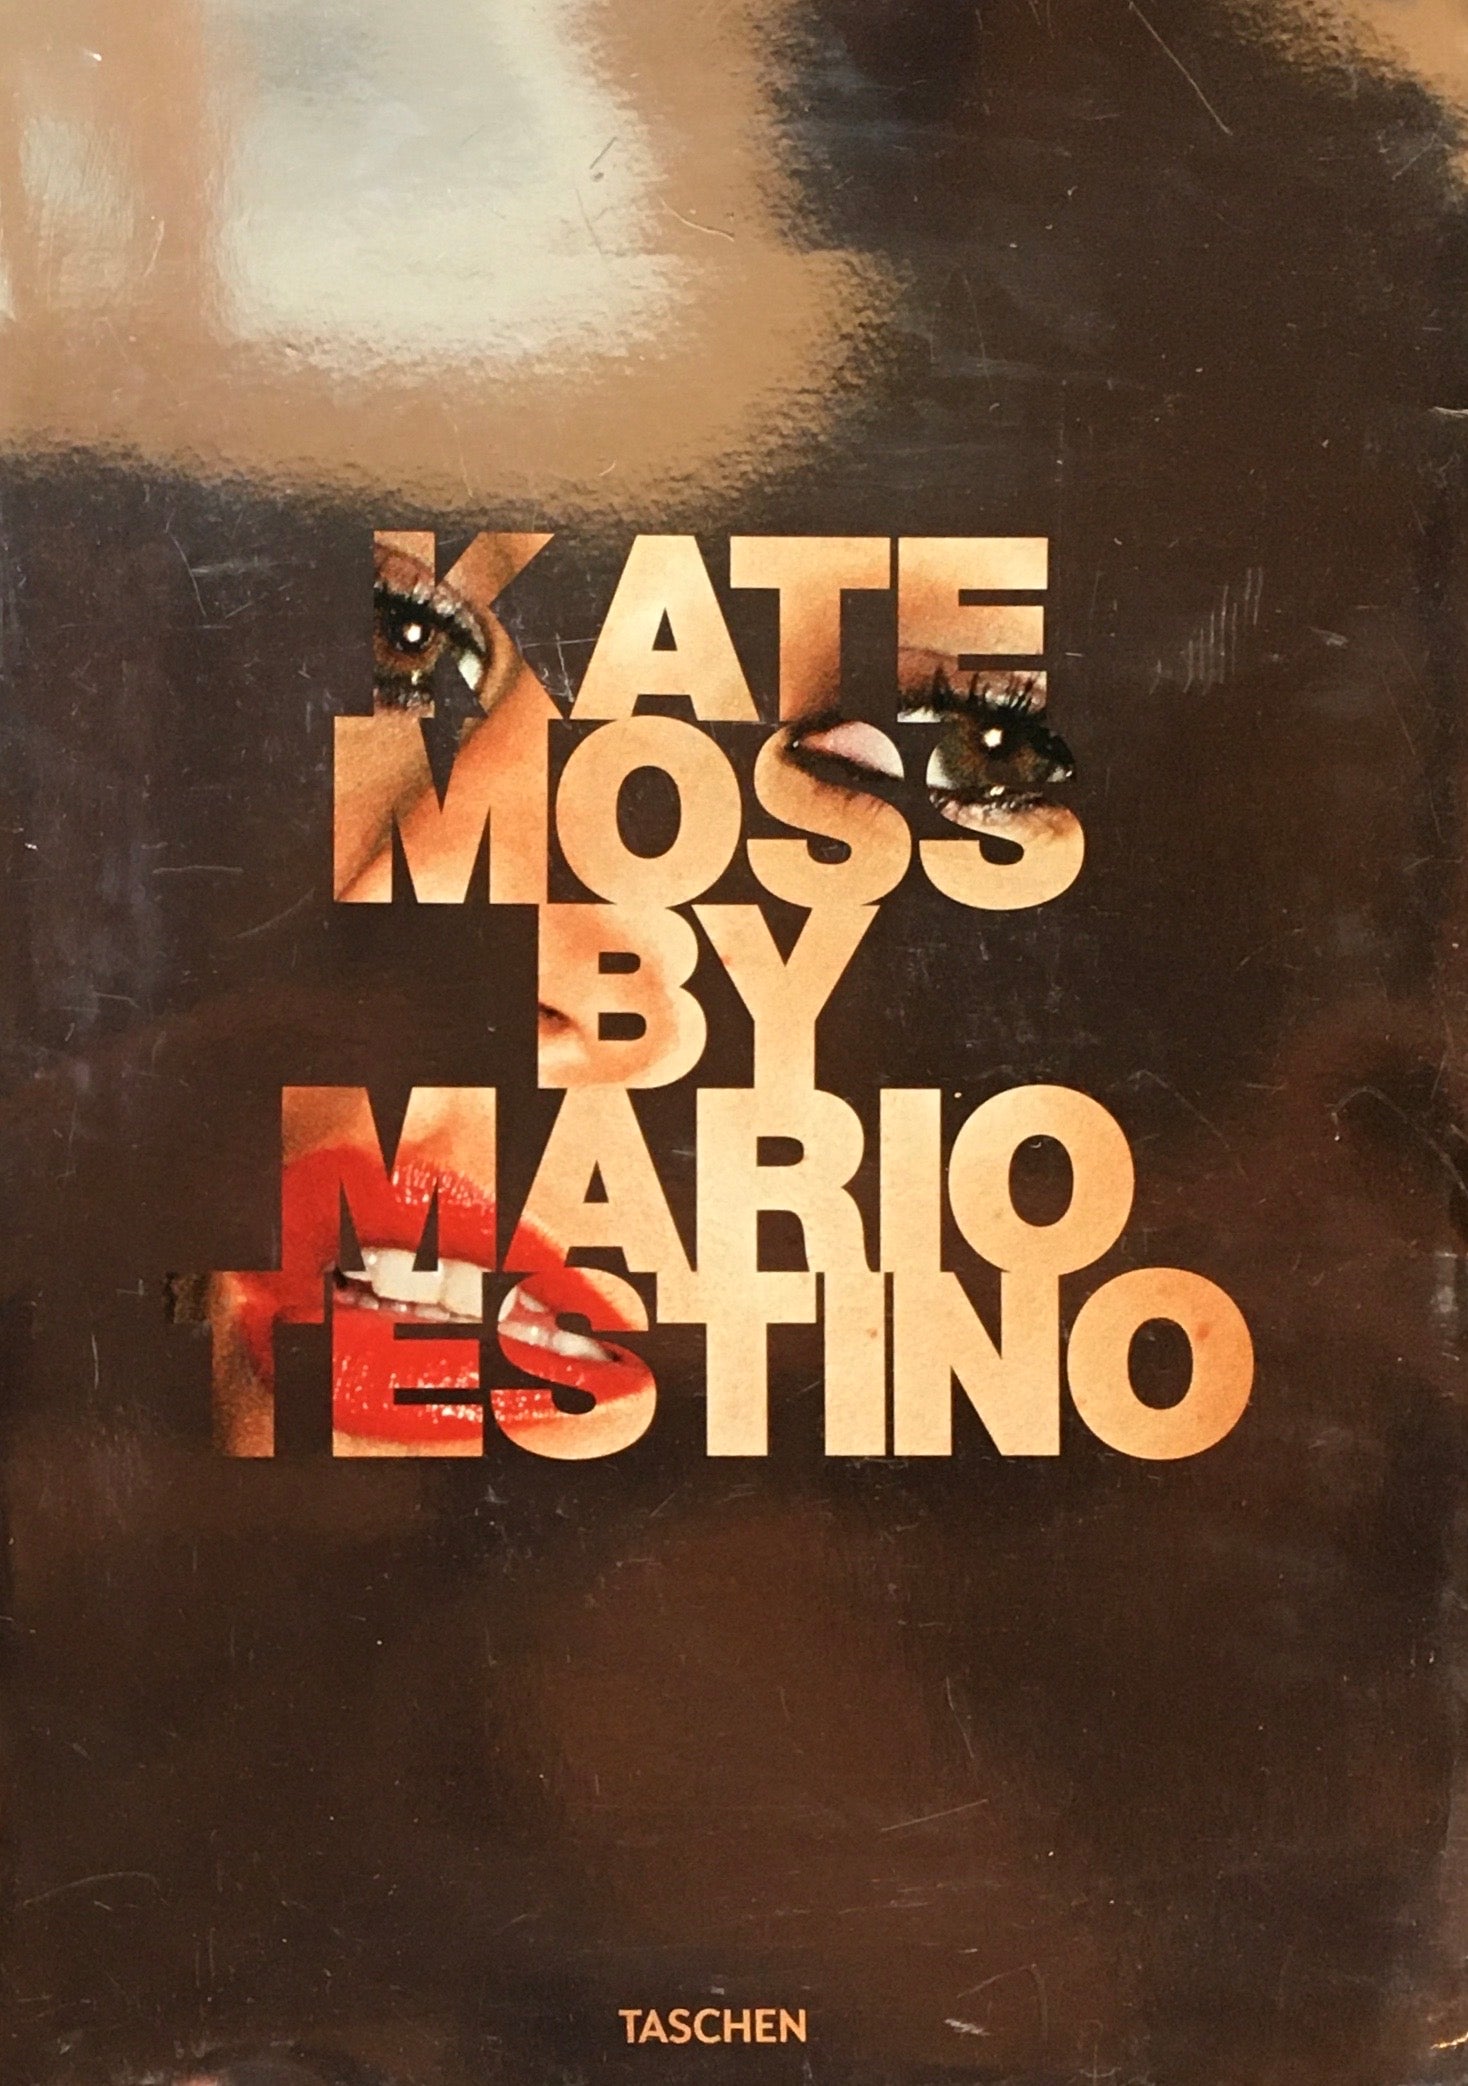 KATE MOSS BY MARIO TESTINO – smokebooks shop